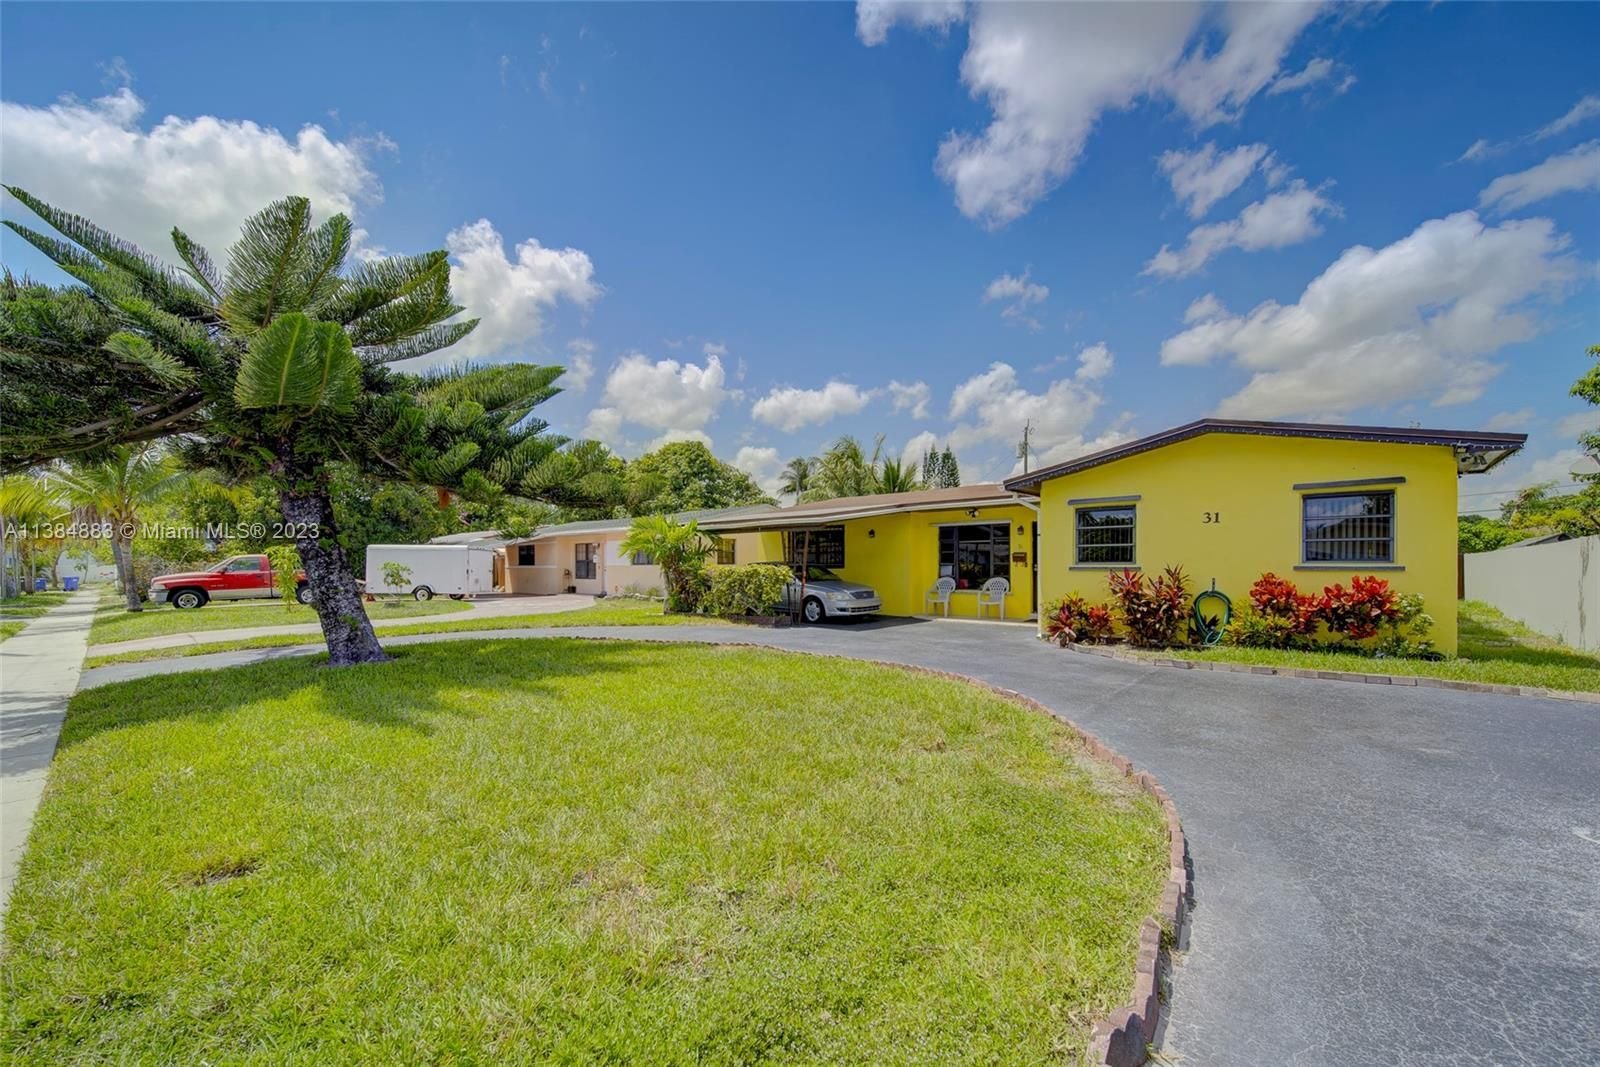 Real estate property located at 31 170th St, Miami-Dade County, North Miami Beach, FL